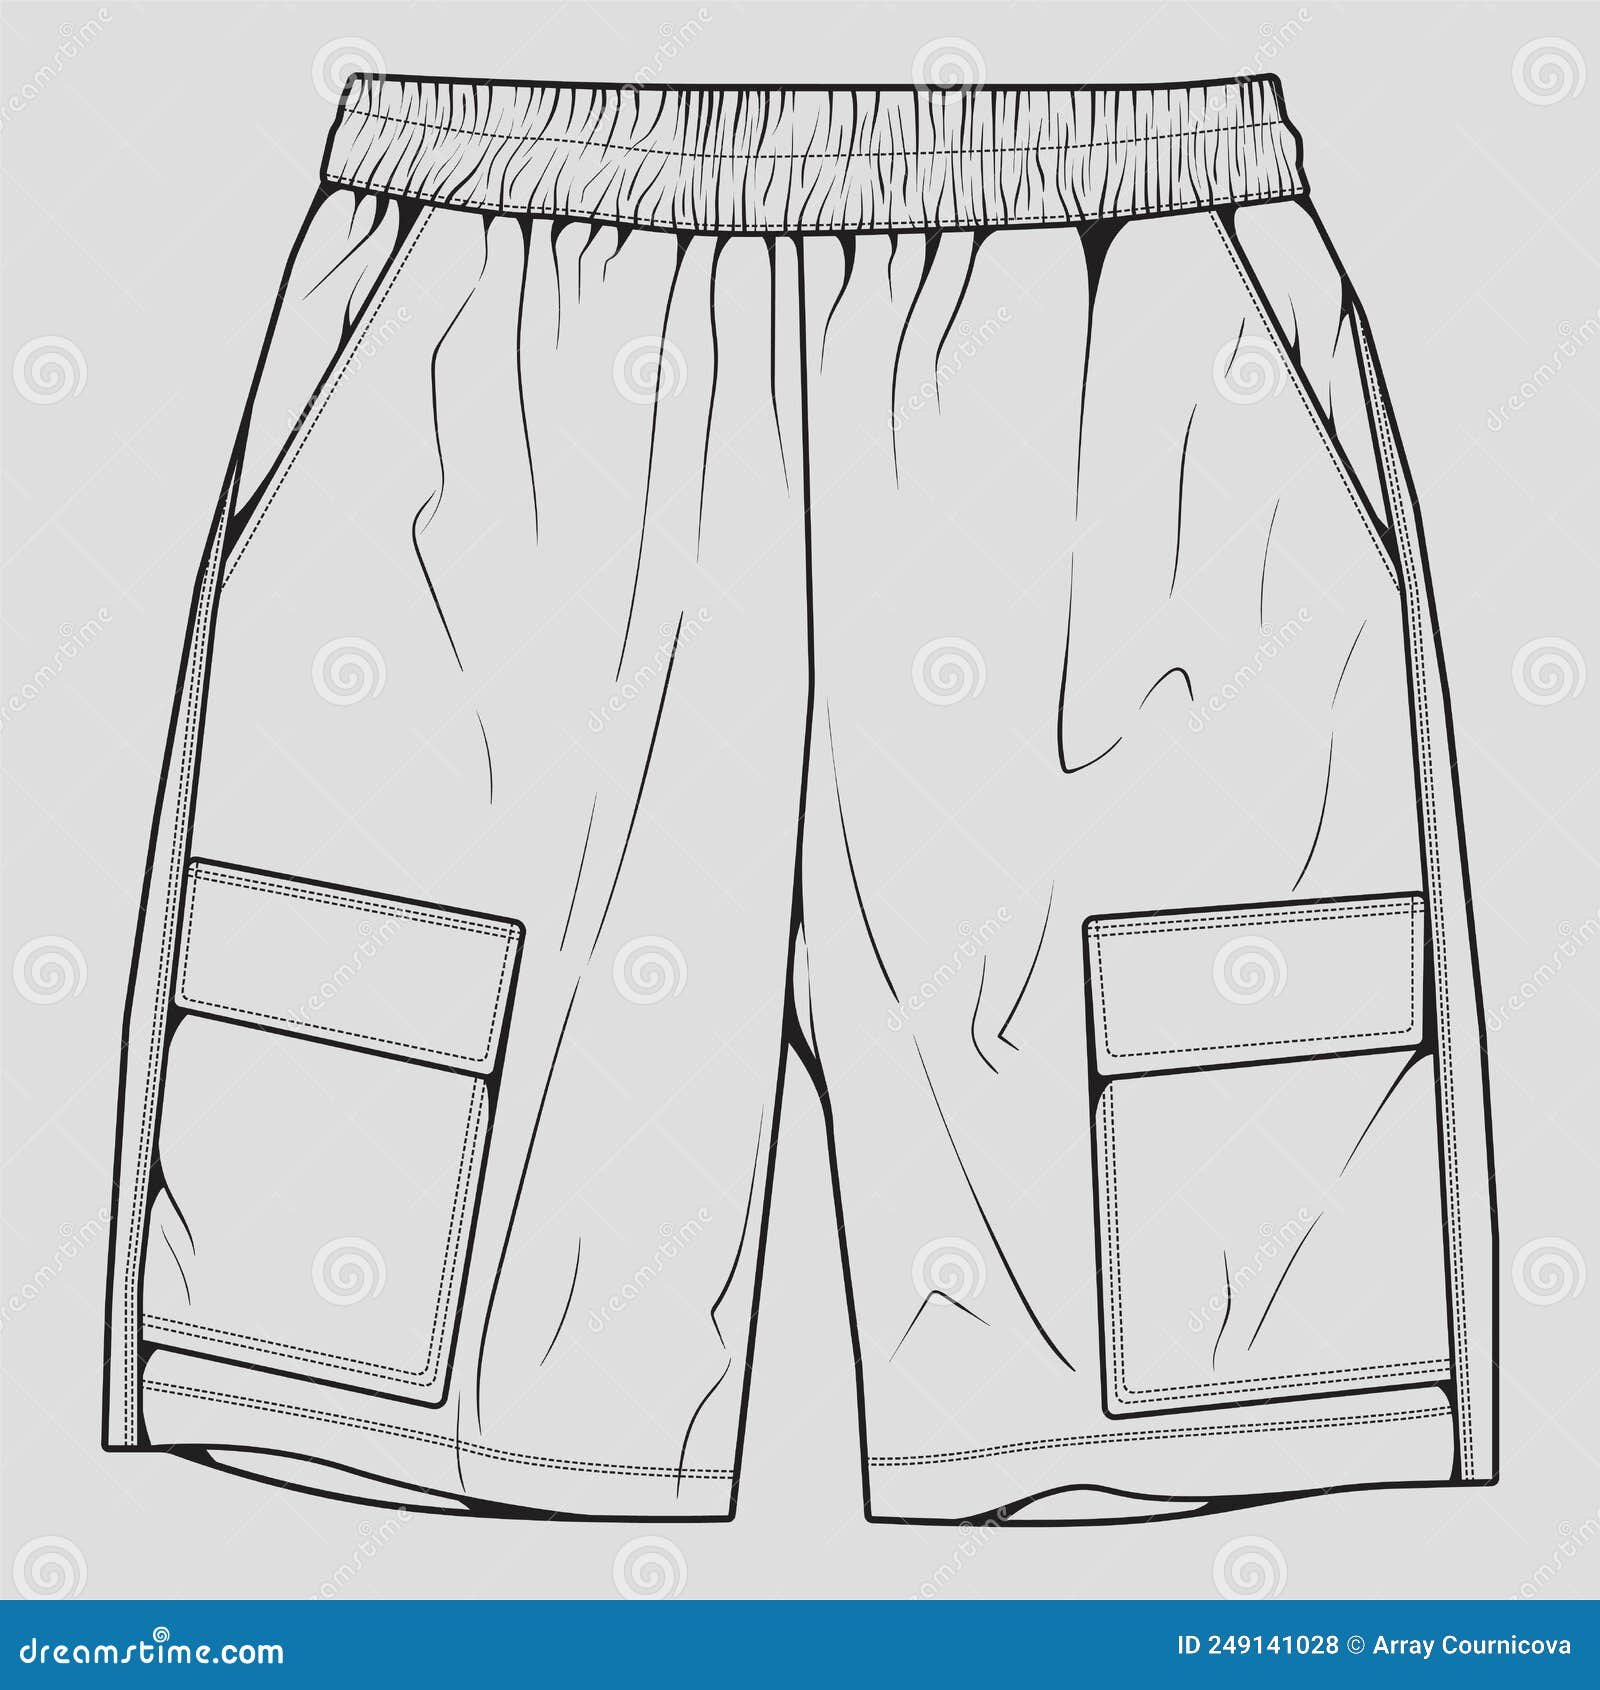 Short Pants Stock Vector Illustration and Royalty Free Short Pants Clipart